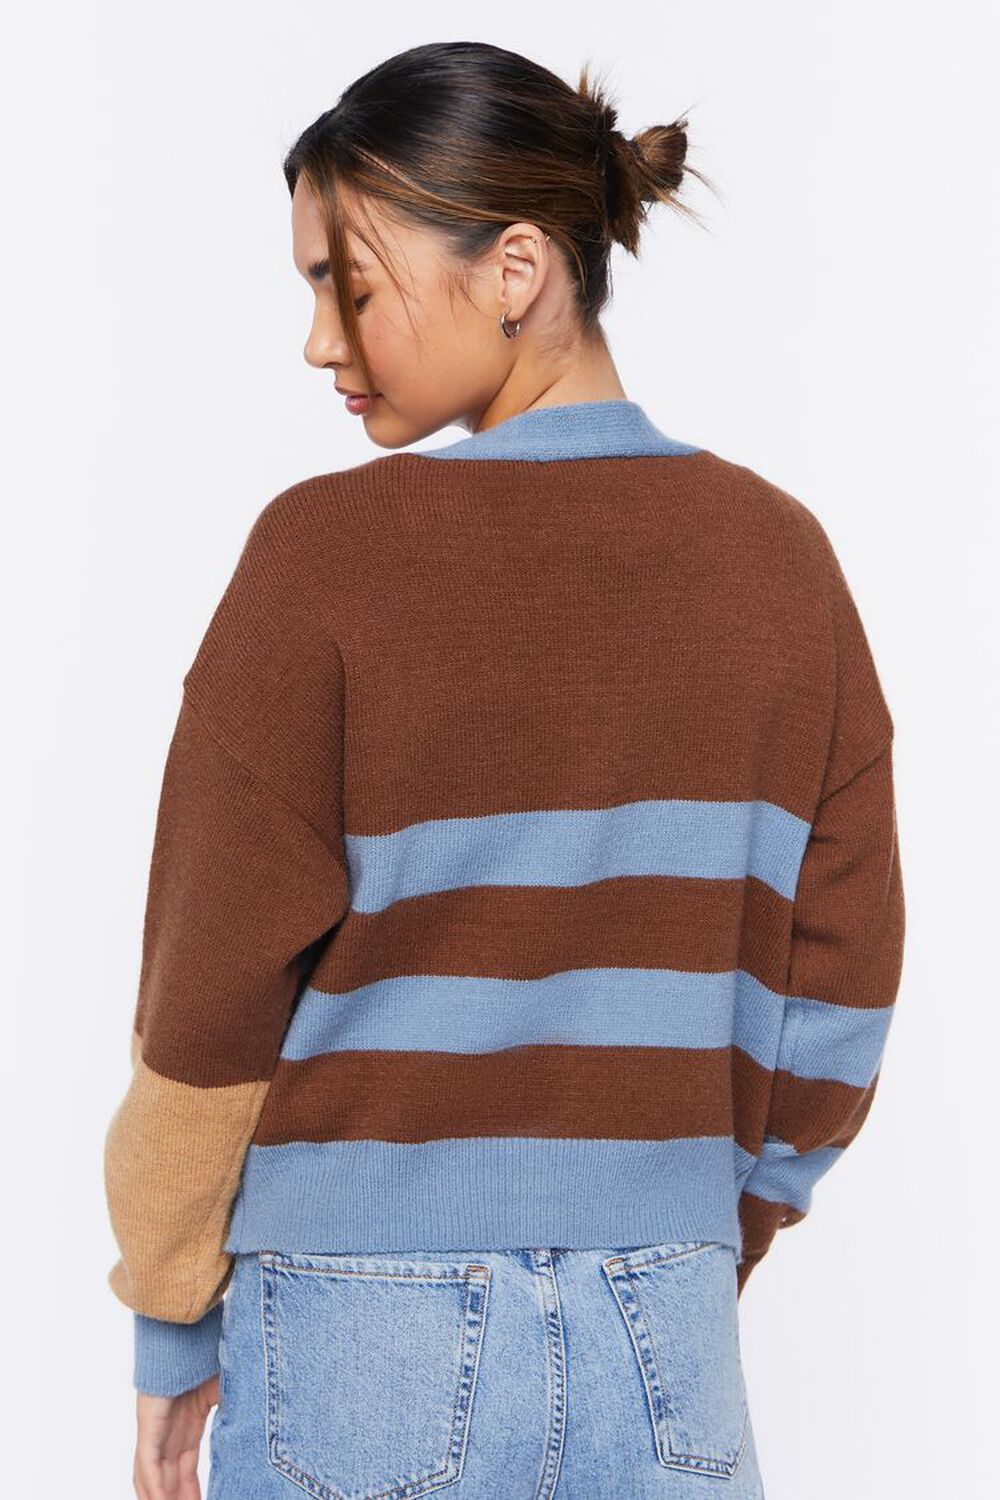 BLUE/BROWN Striped Cardigan Sweater, image 3